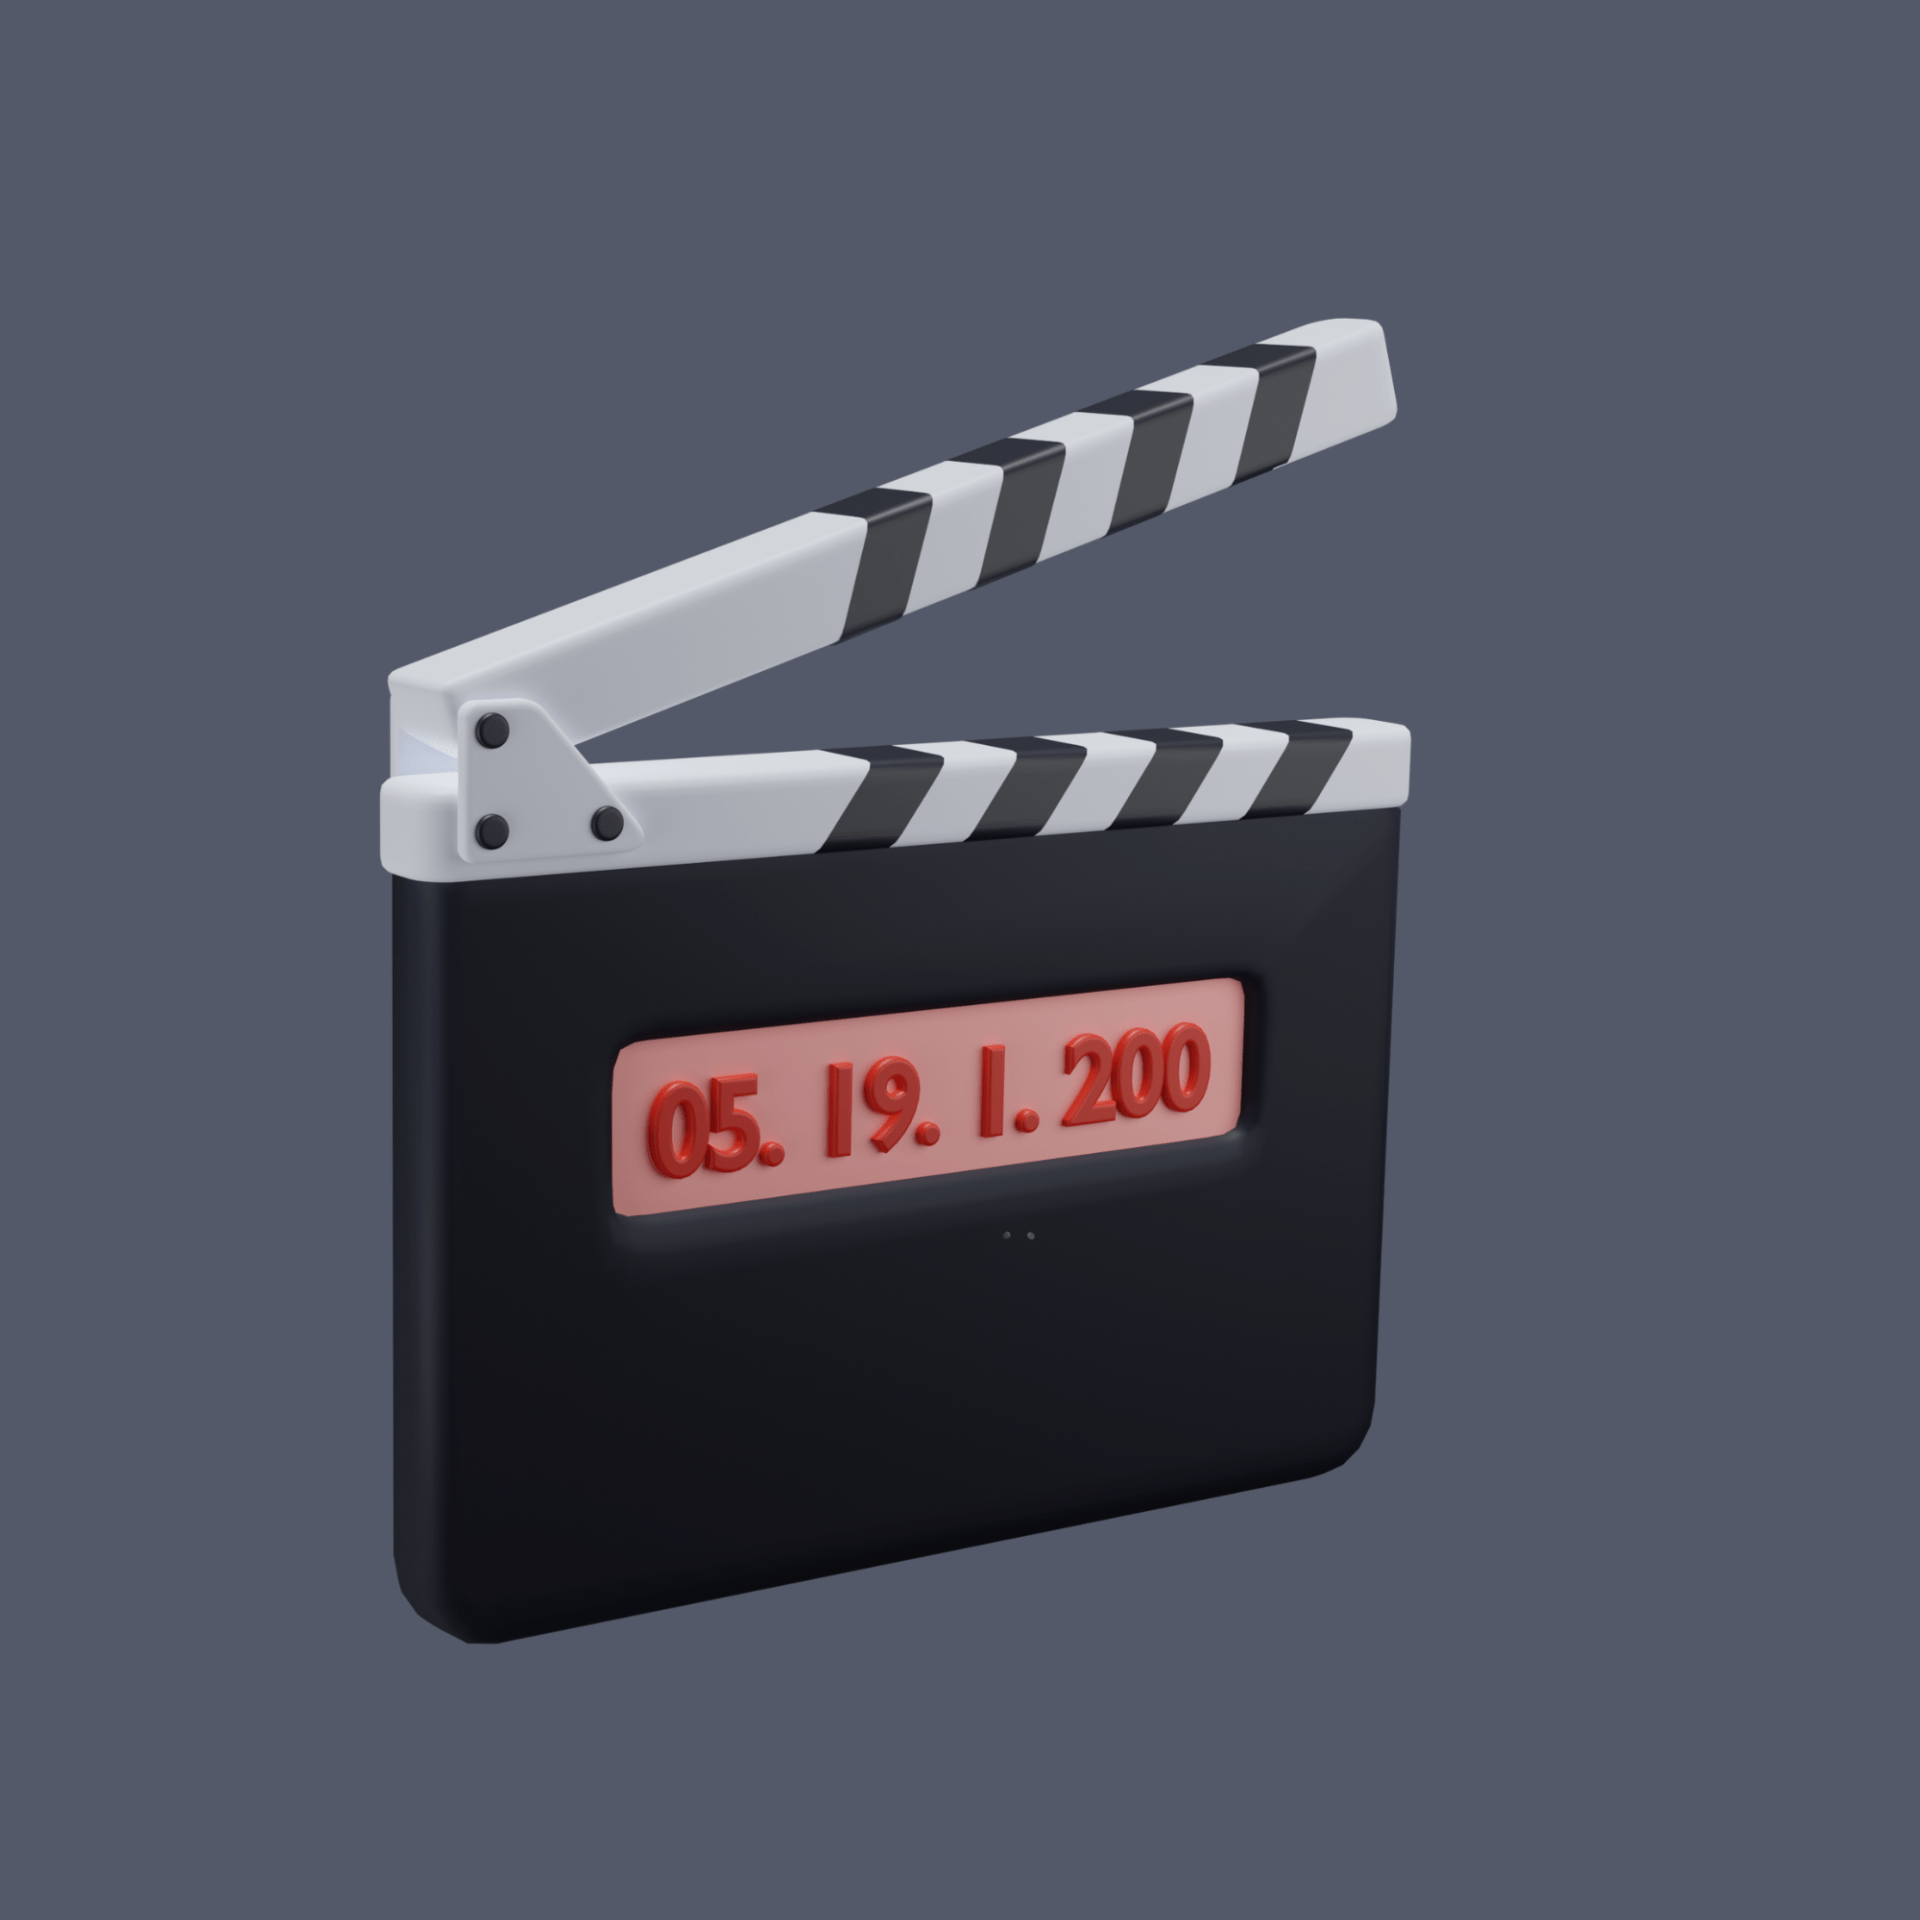 cinema-clapper-3d-icon-clapboard-cinema-theater-movie-film